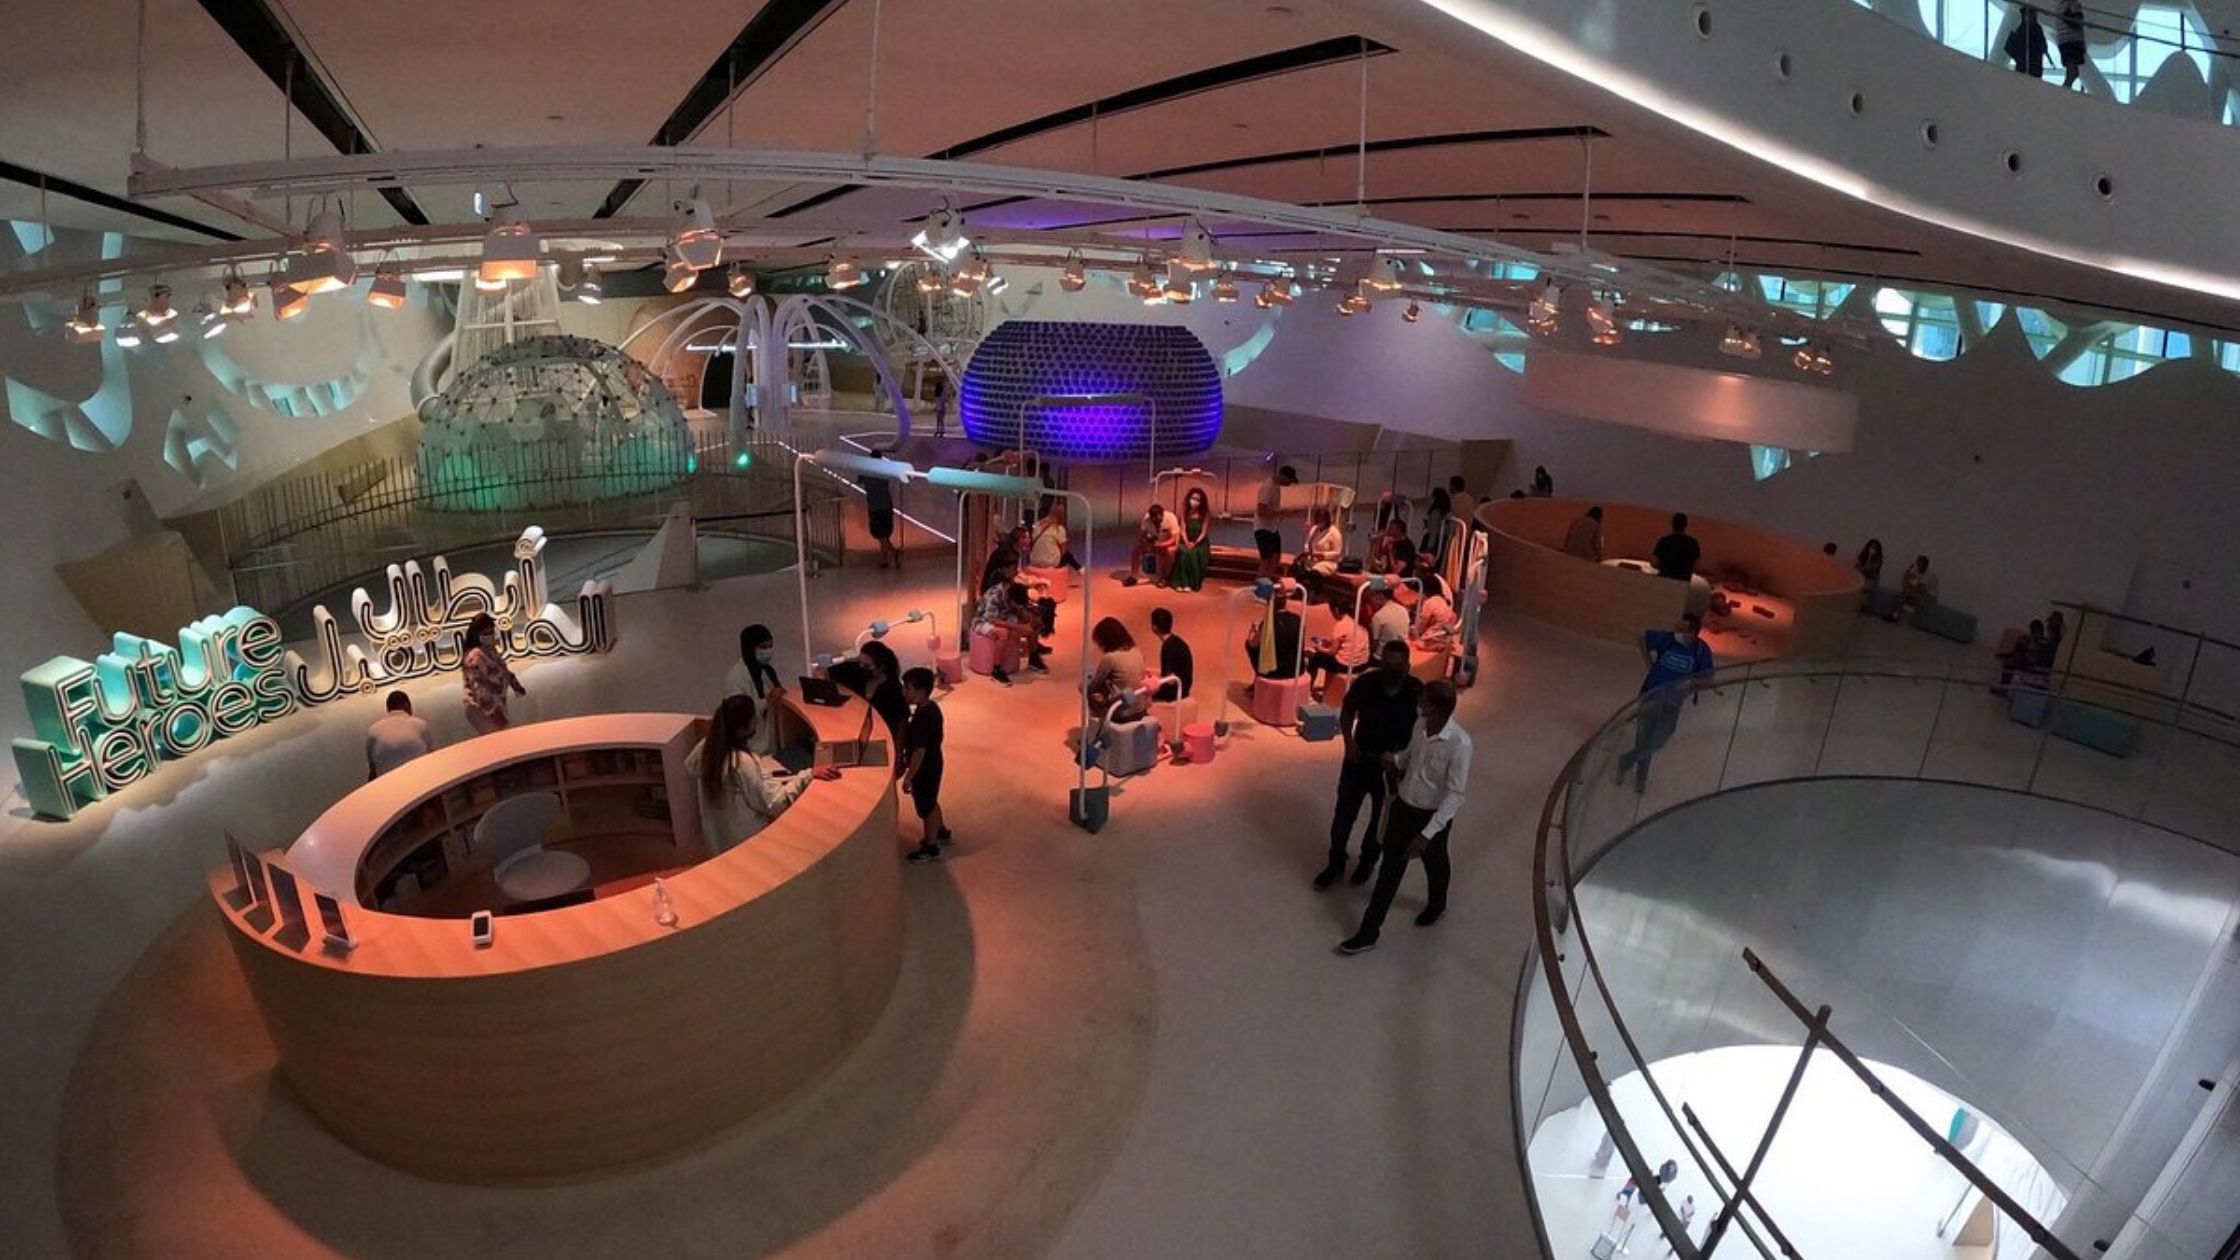 Dubai's Museum of the Future platform